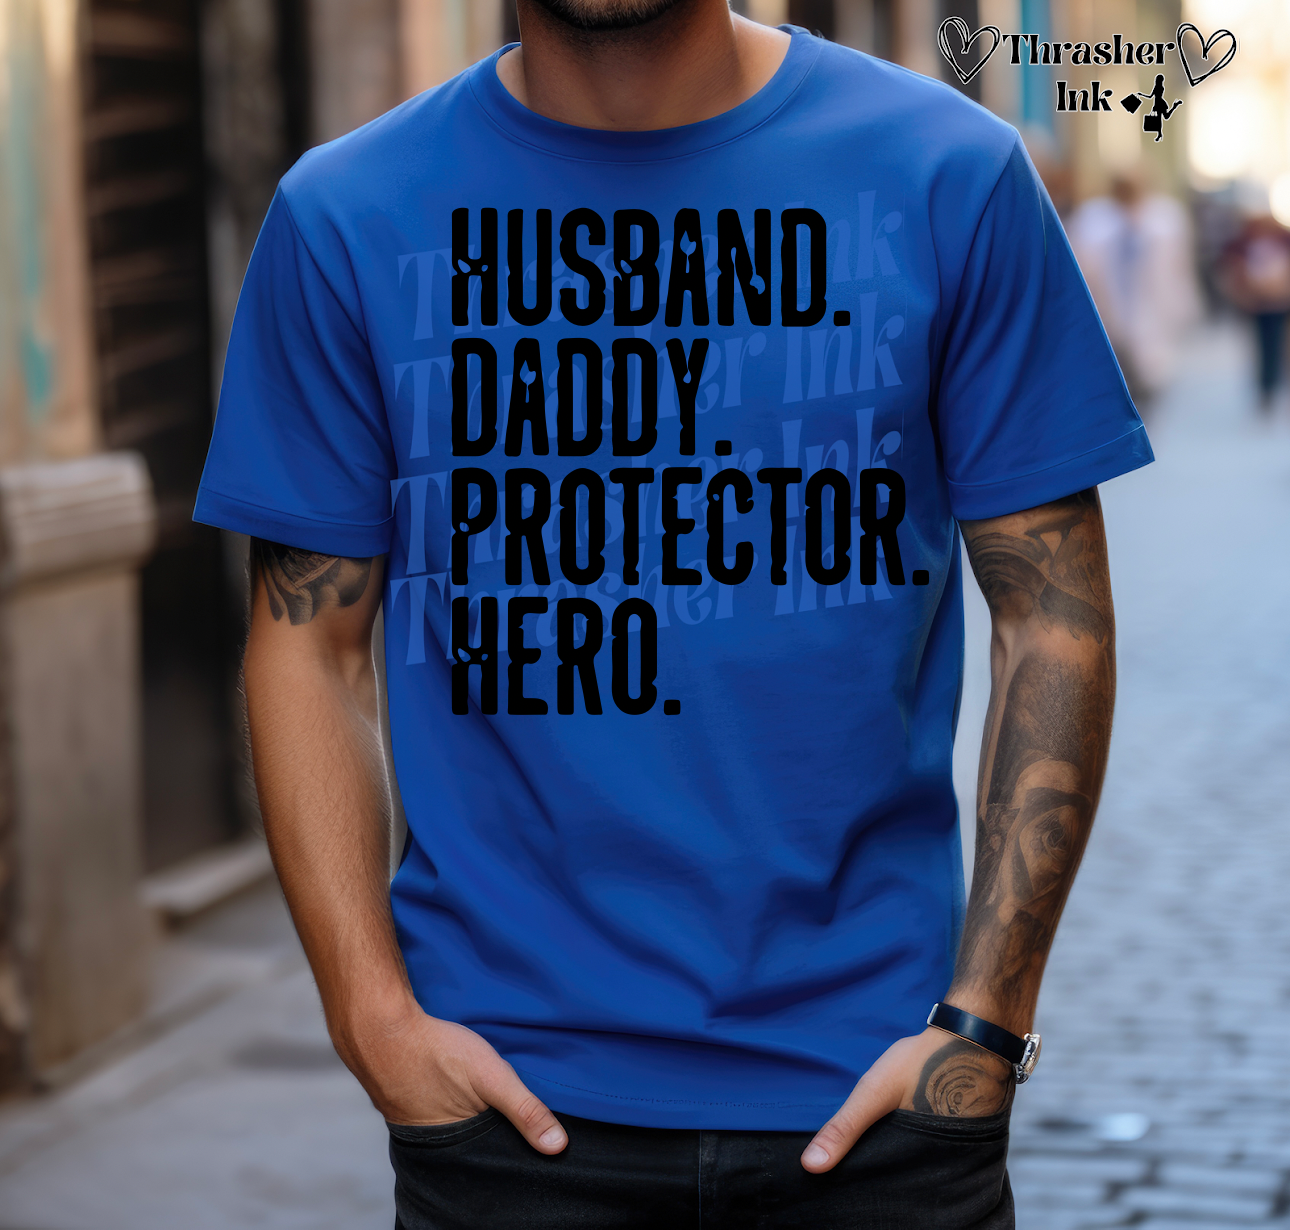 Husband. Daddy. Protector. Hero.